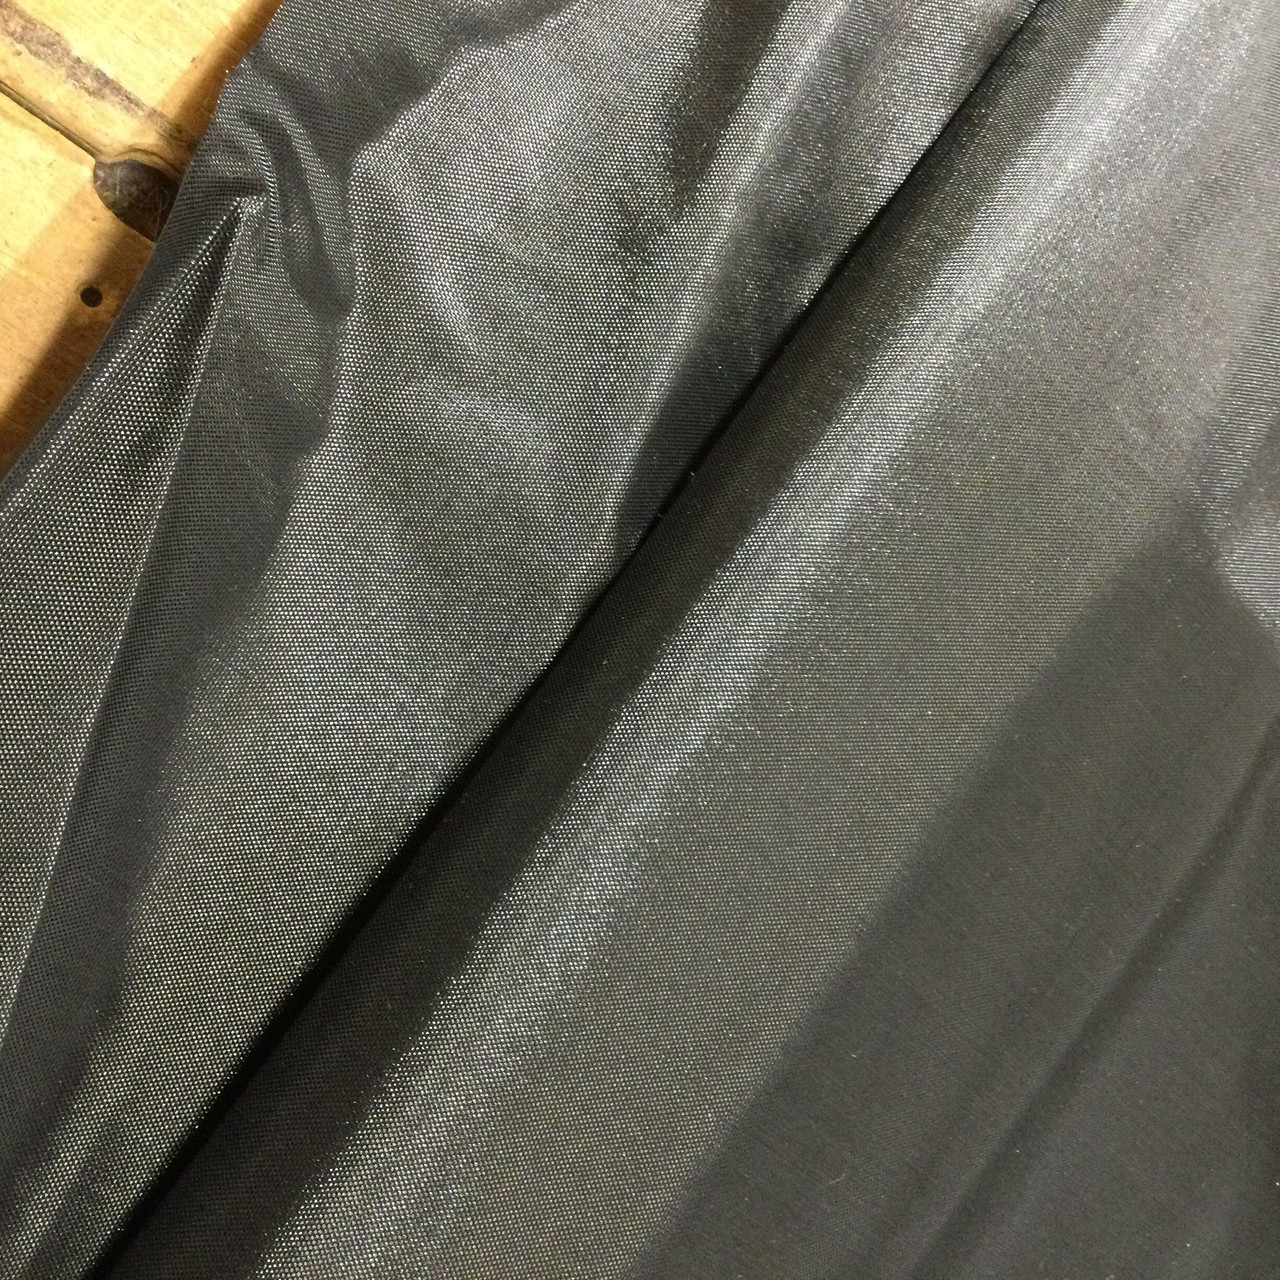 Solid Black Ripstop Nylon Fabric, Indoor / Outdoor